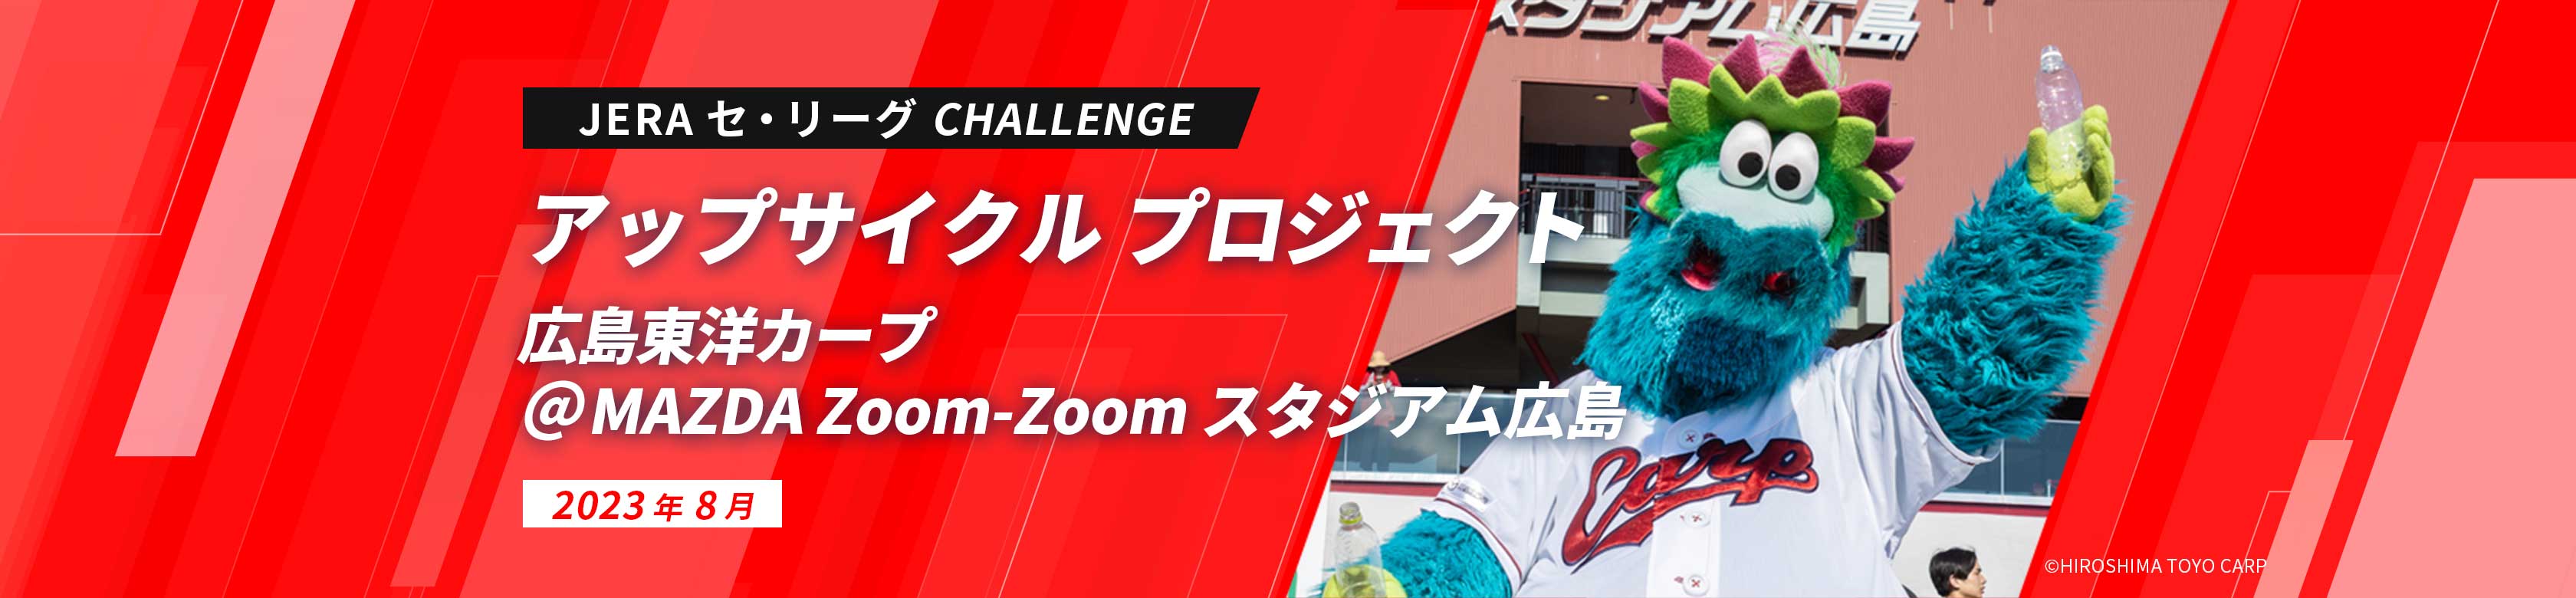 JERA セ・リーグ CHALLENGE アップサイクル プロジェクト 広島東洋カープ＠MAZDA Zoom-Zoom スタジアム広島